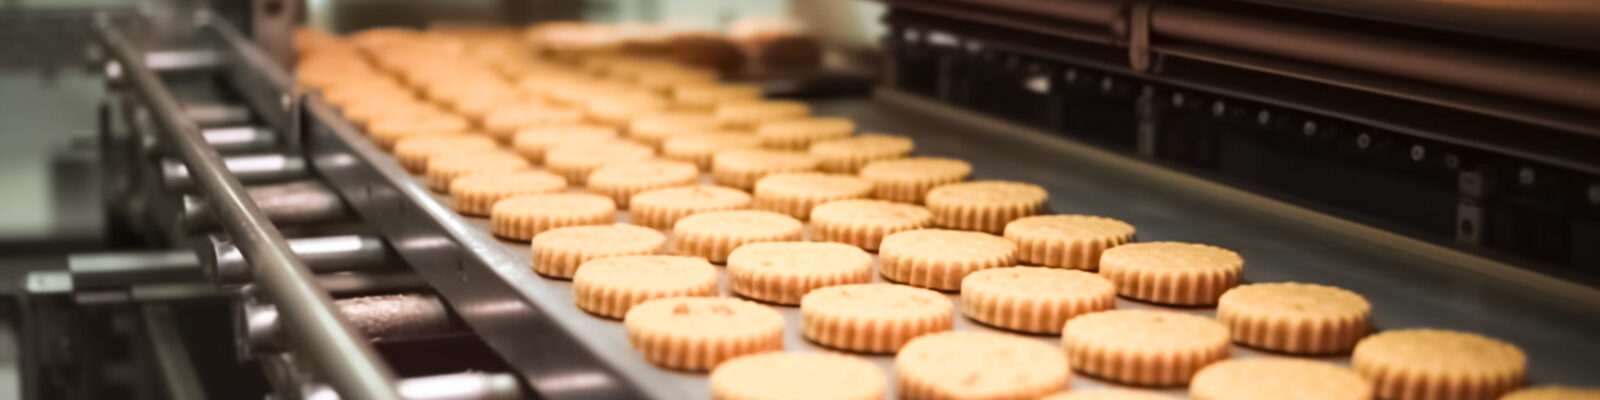 Production line of baking cookies. Biscuits on conveyor belt in